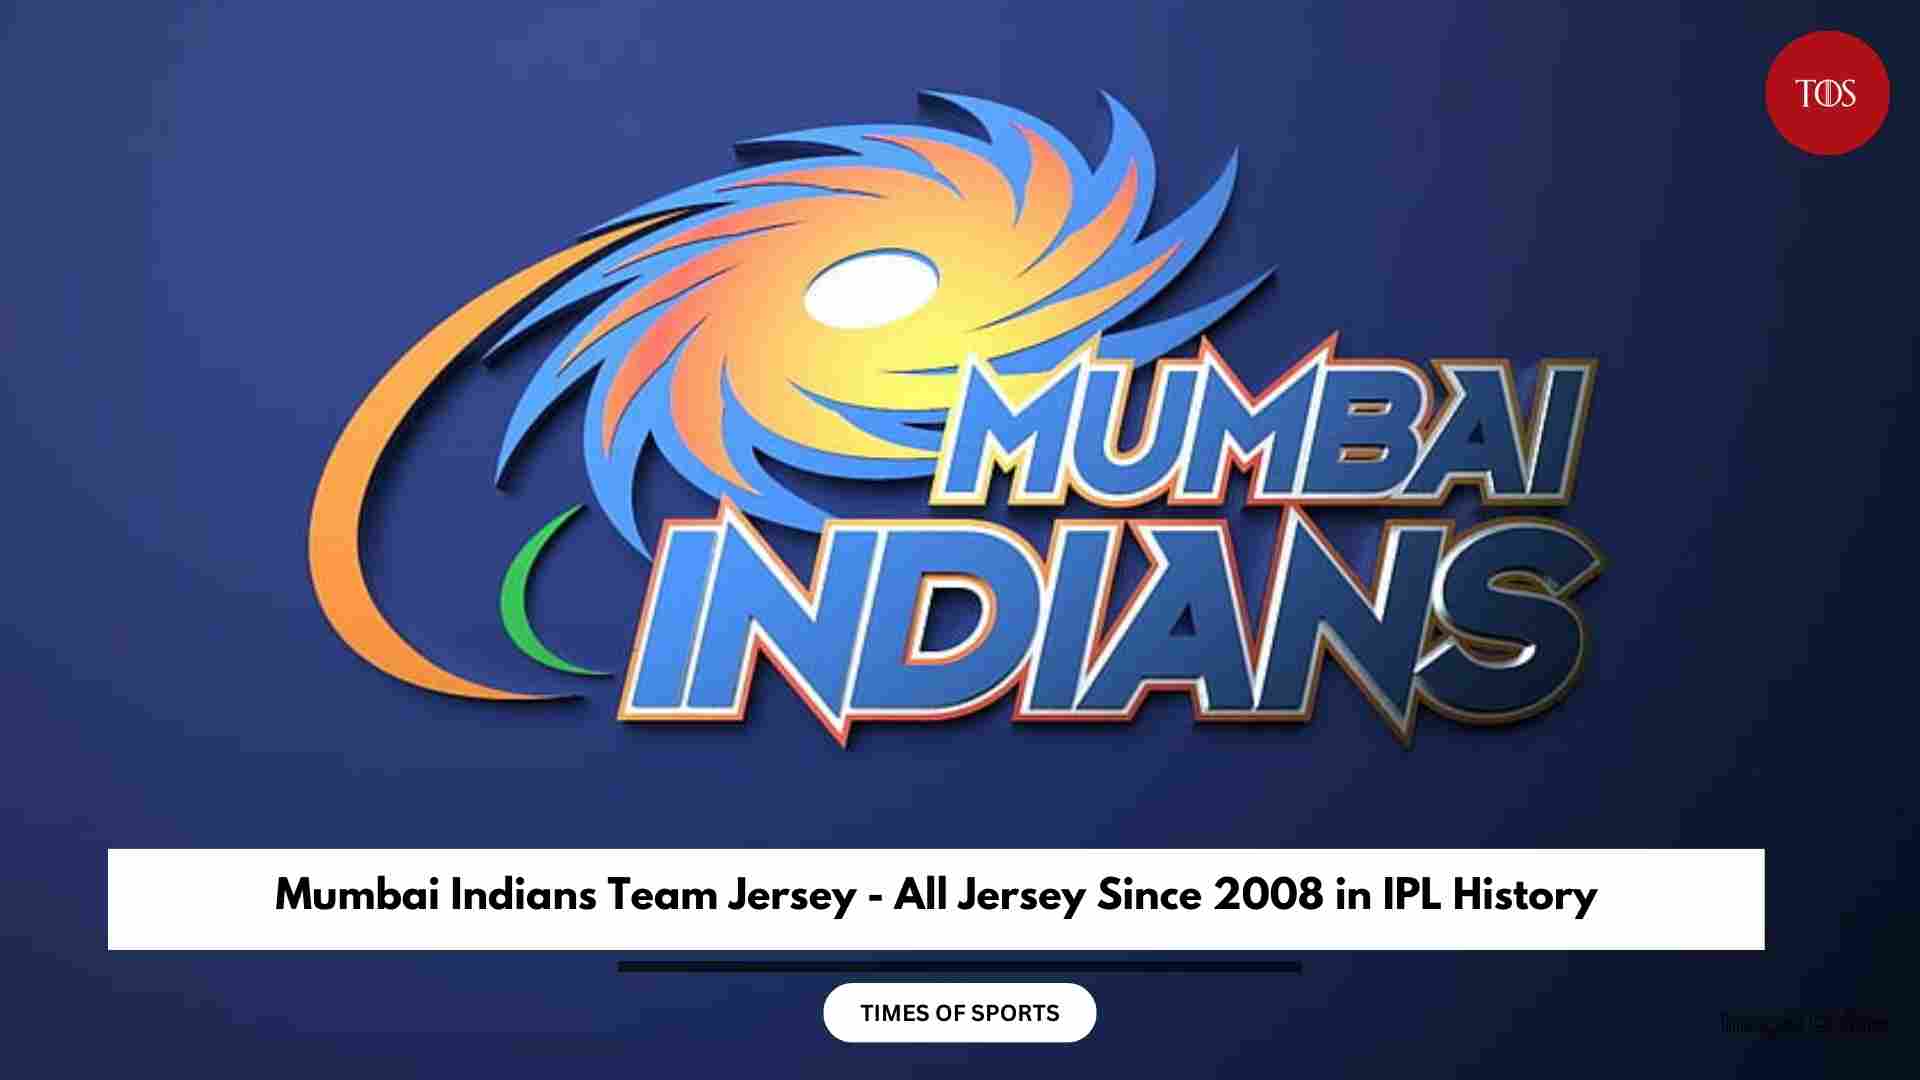 Which IPL team has best logo? - Quora